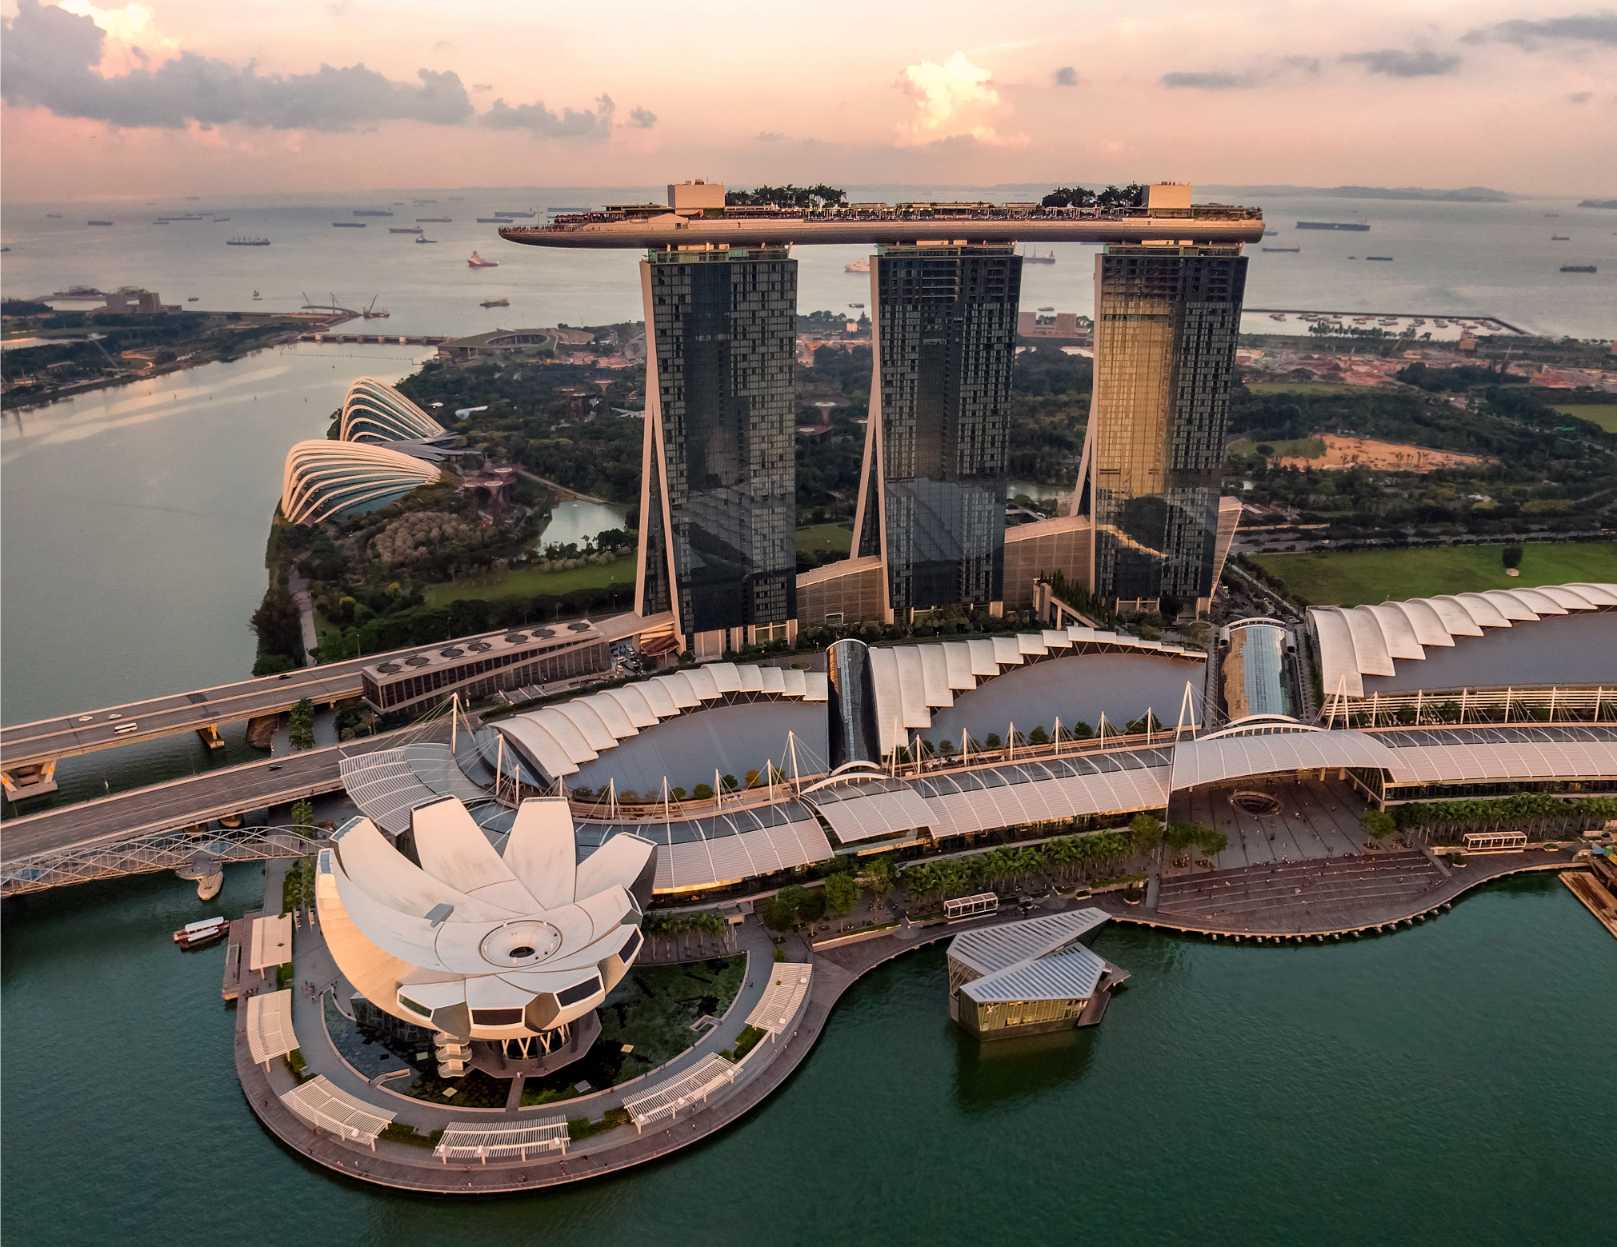 Amazon Singapore - Does Amazon ship to Singapore?